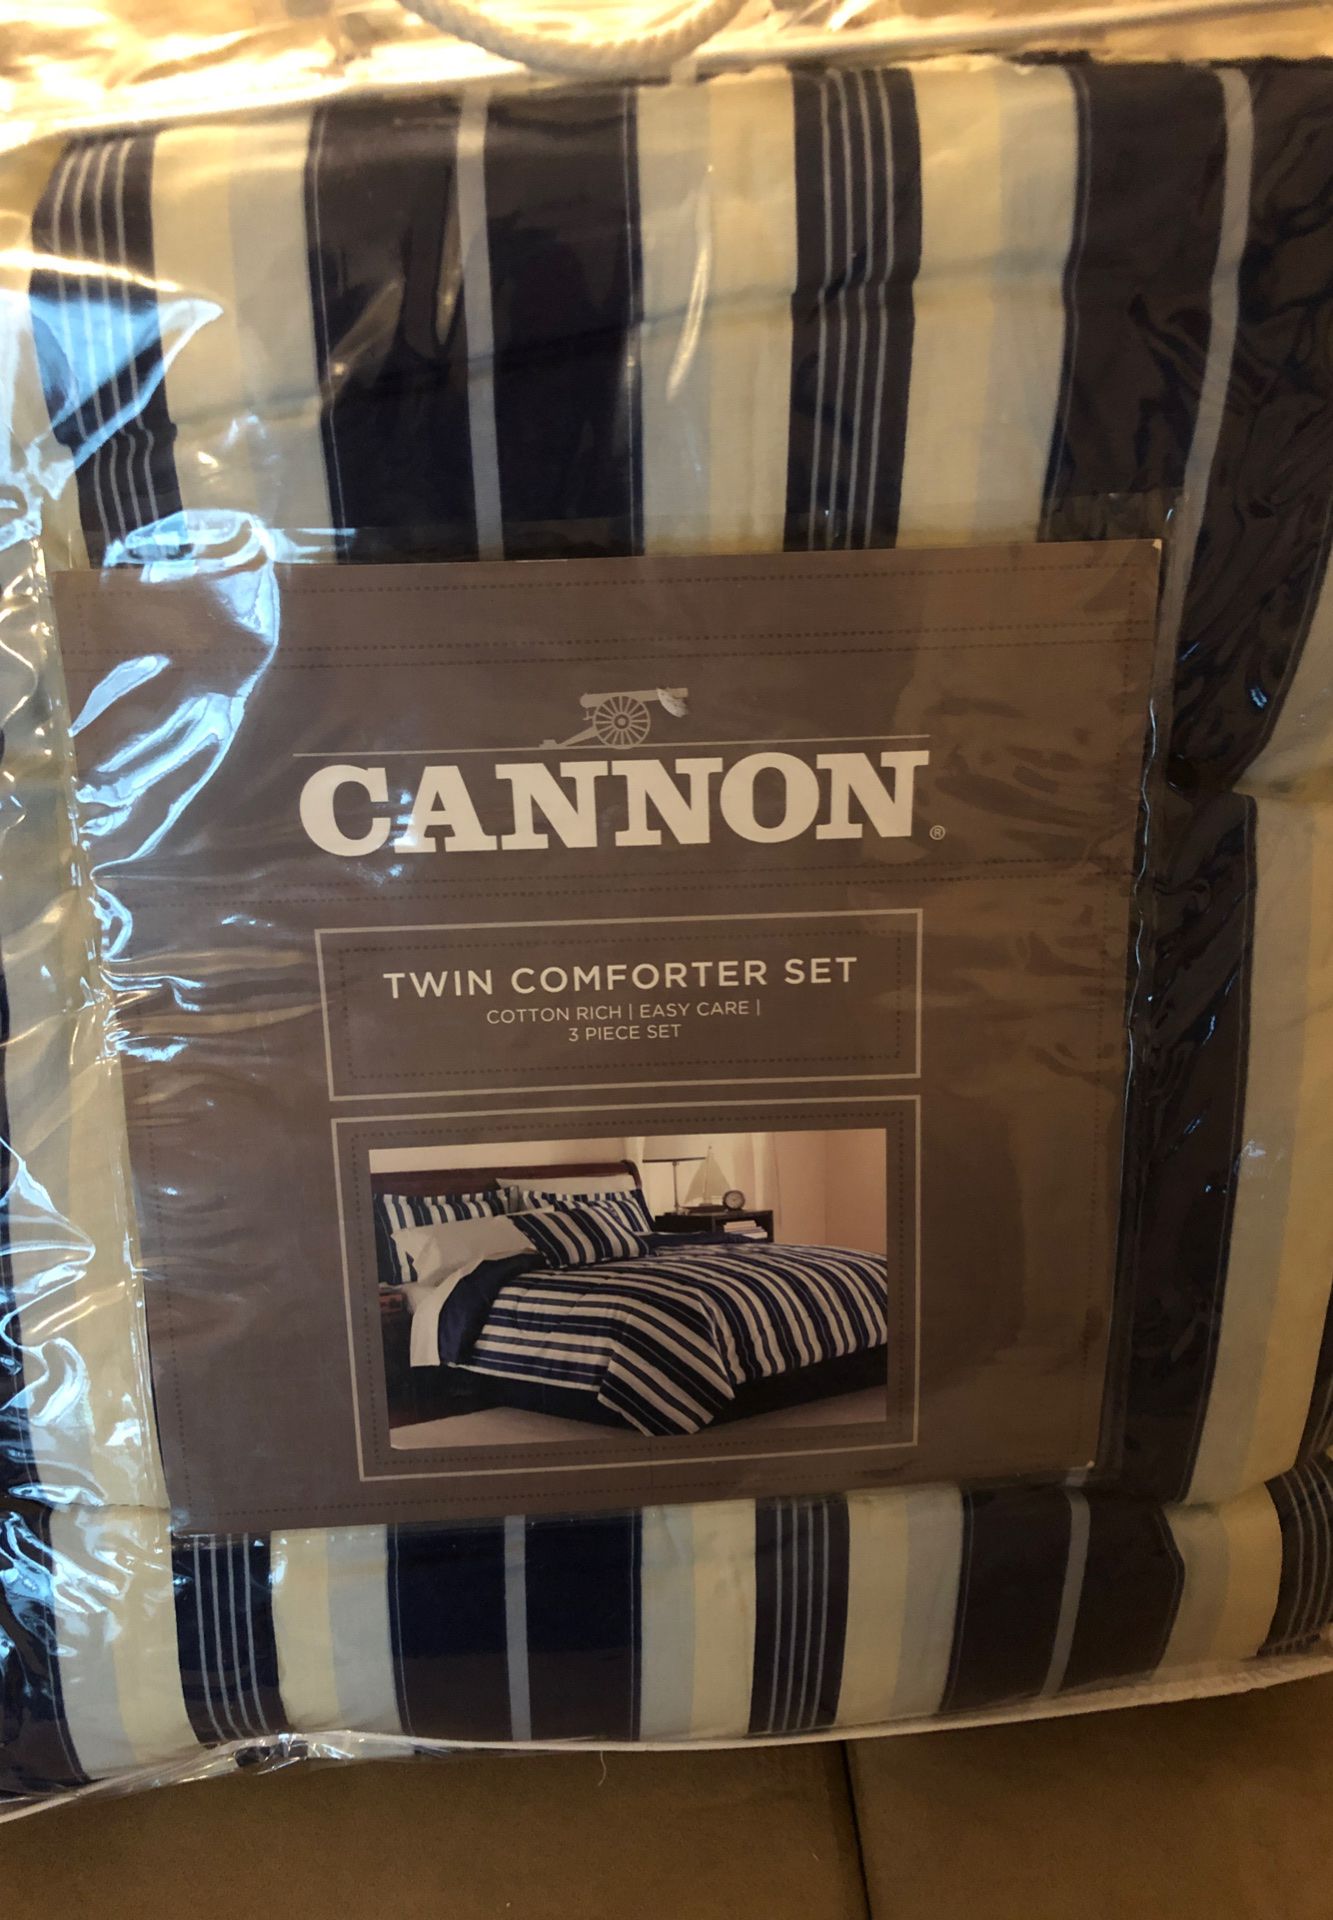 Twin comforter